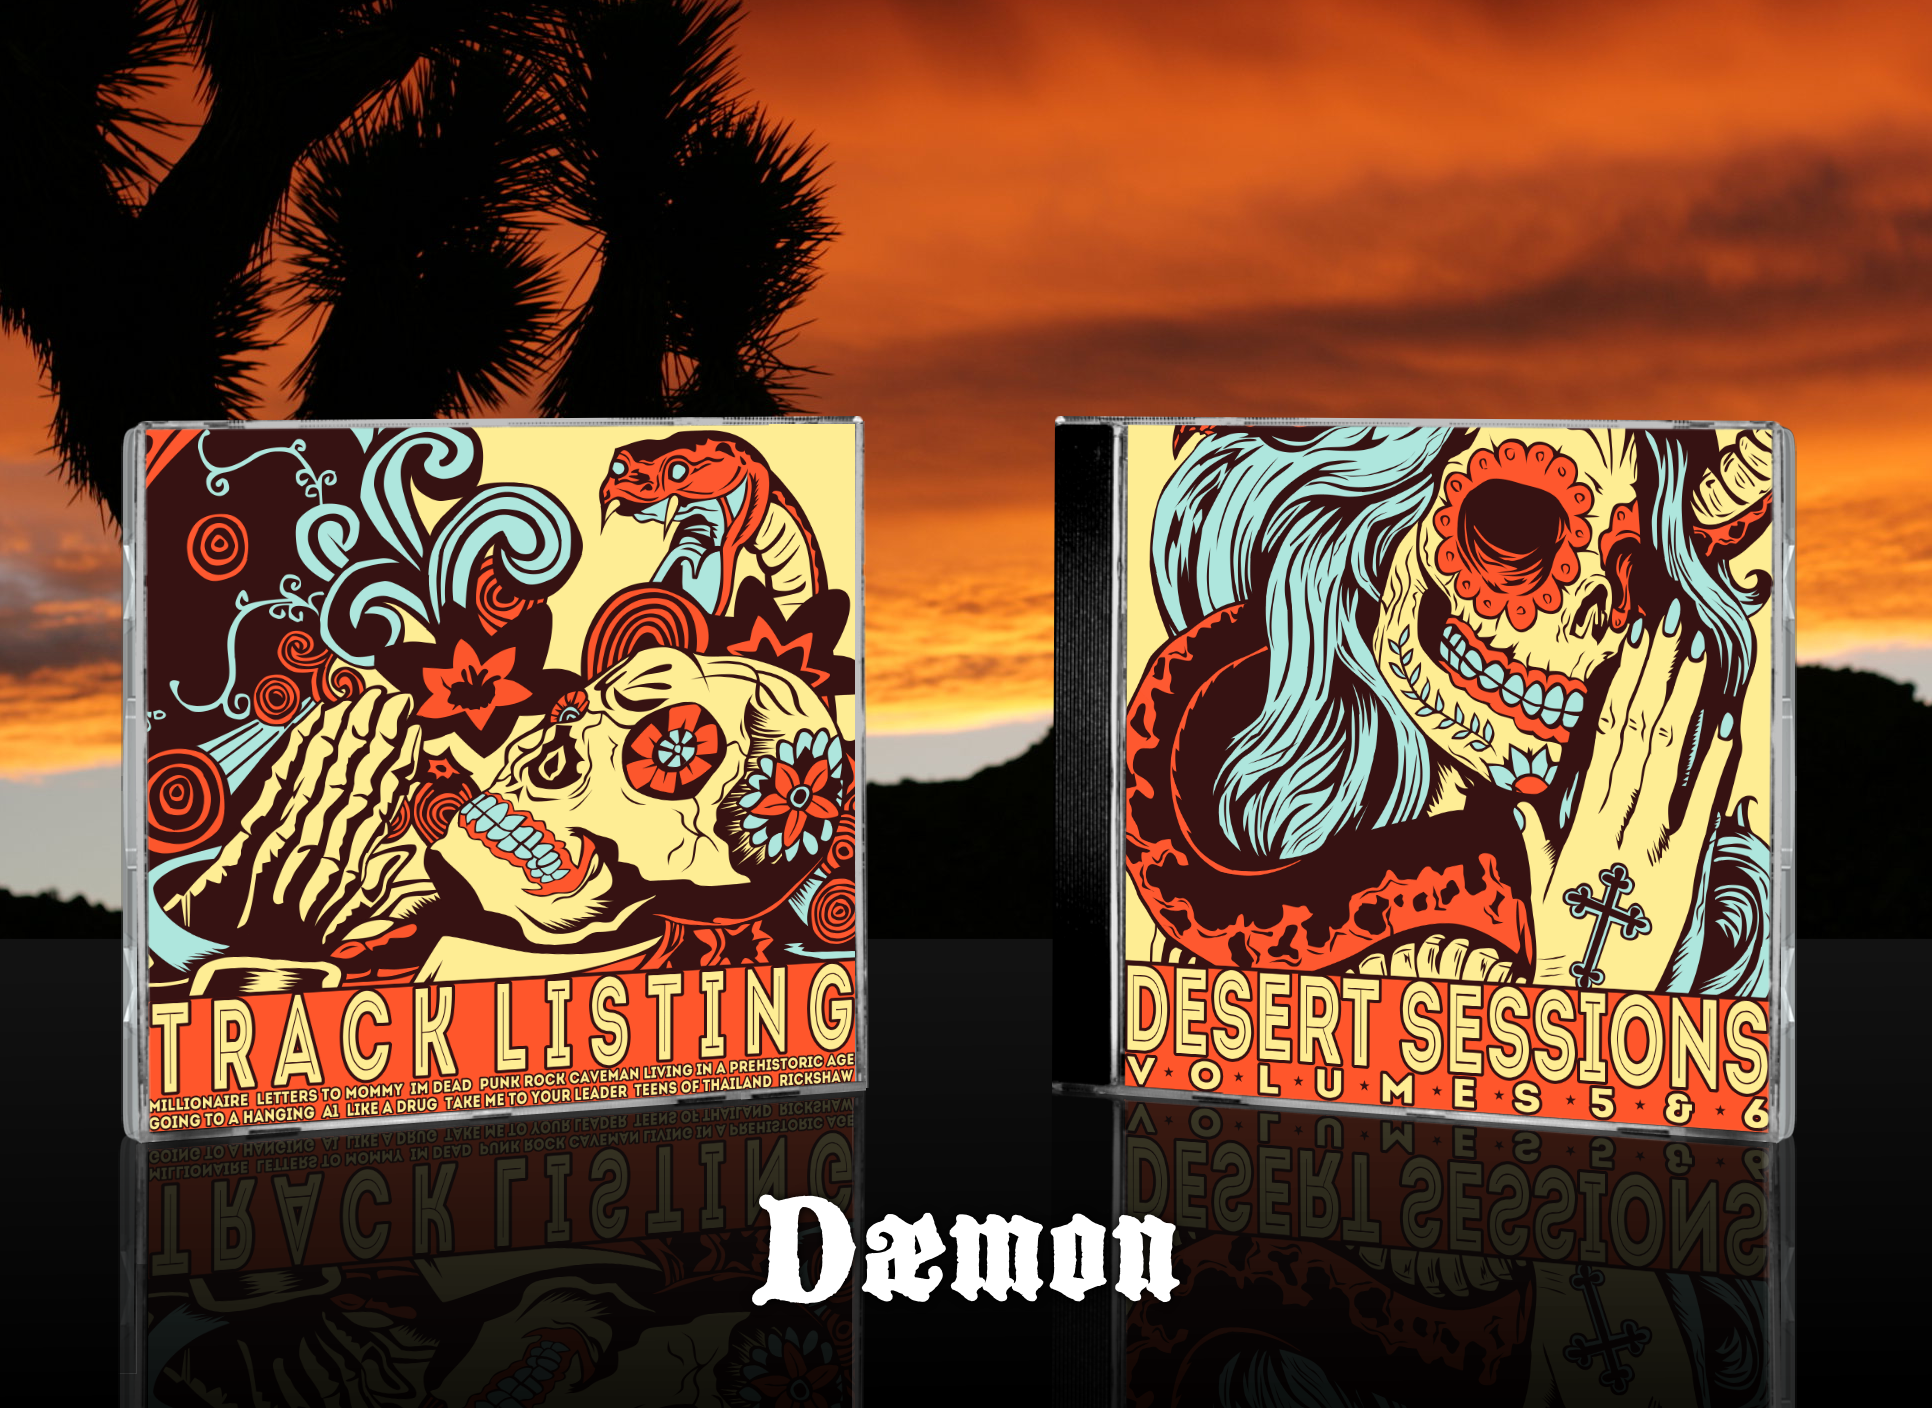 Desert Sessions Vol. 5 & 6 box cover